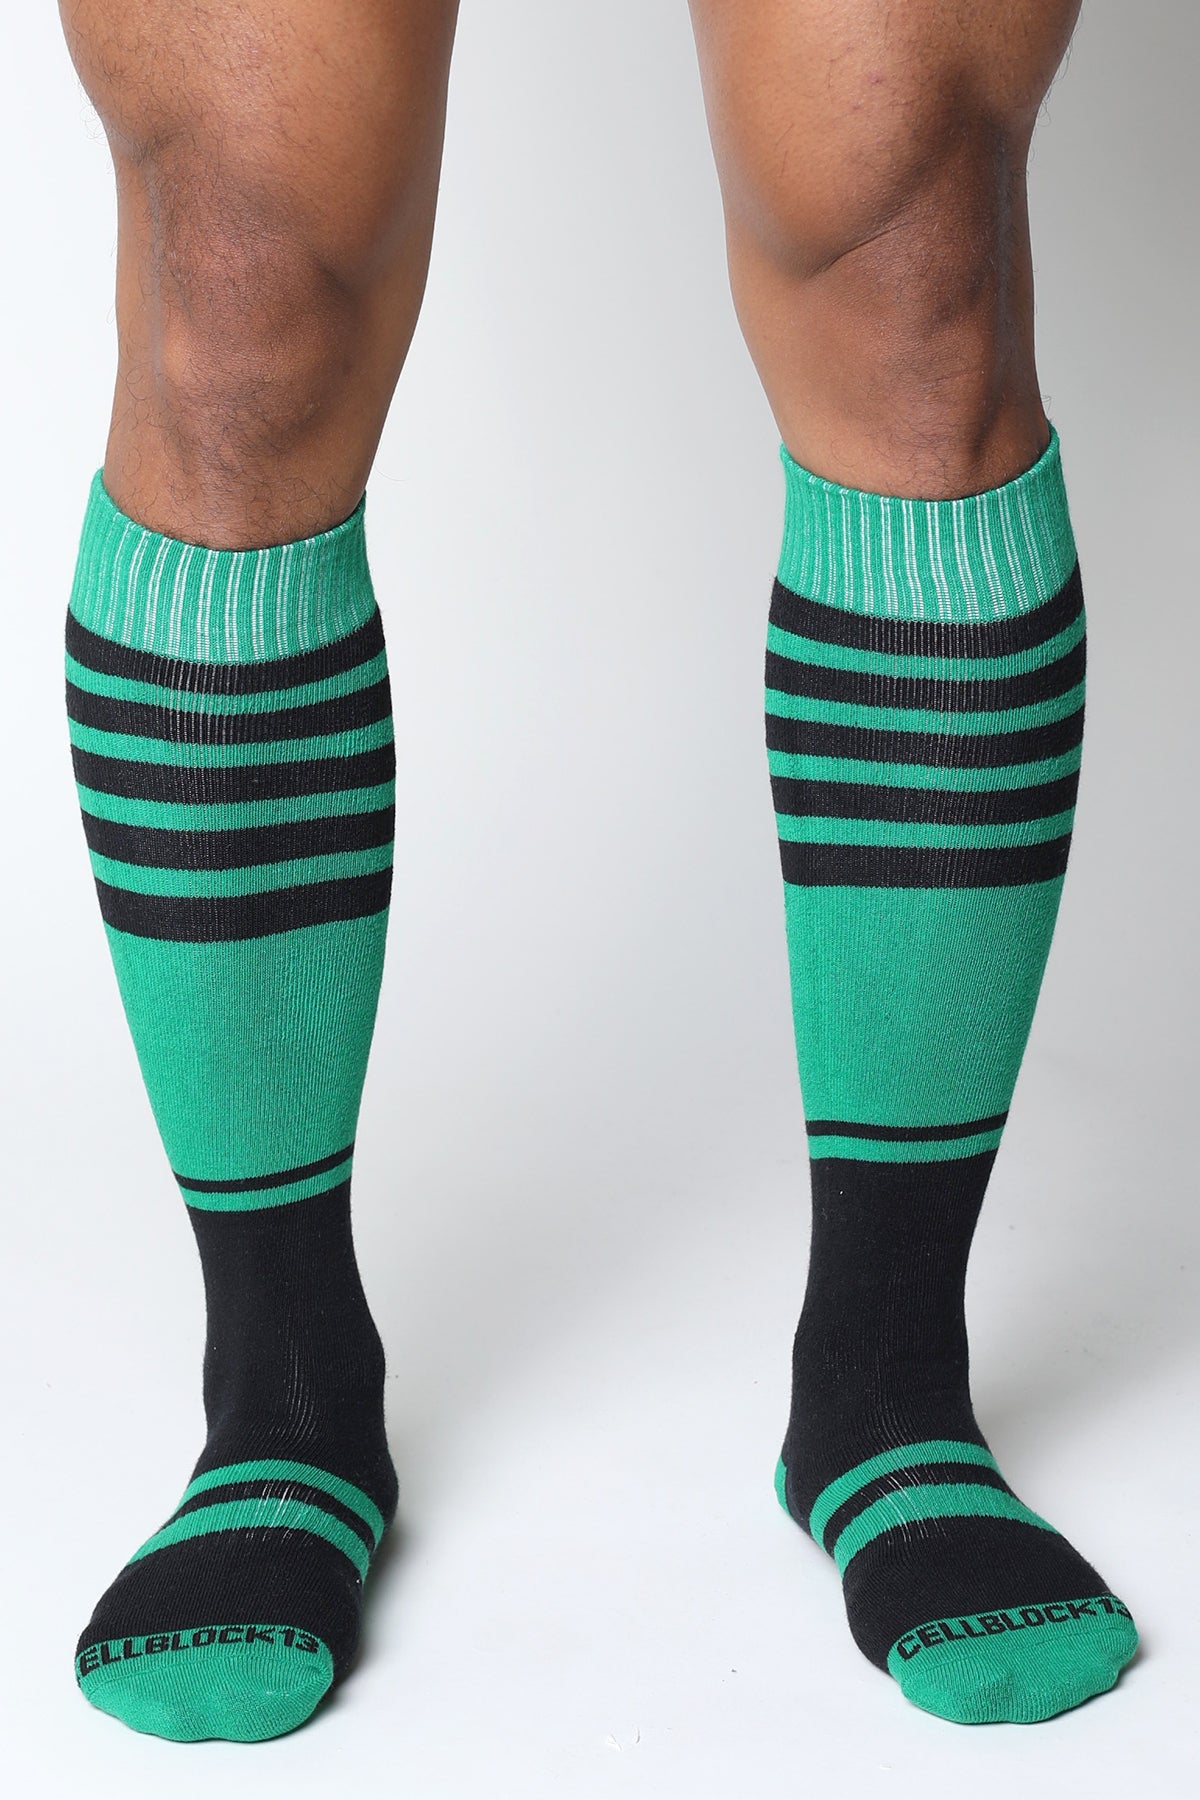 Midfield Knee High Sock